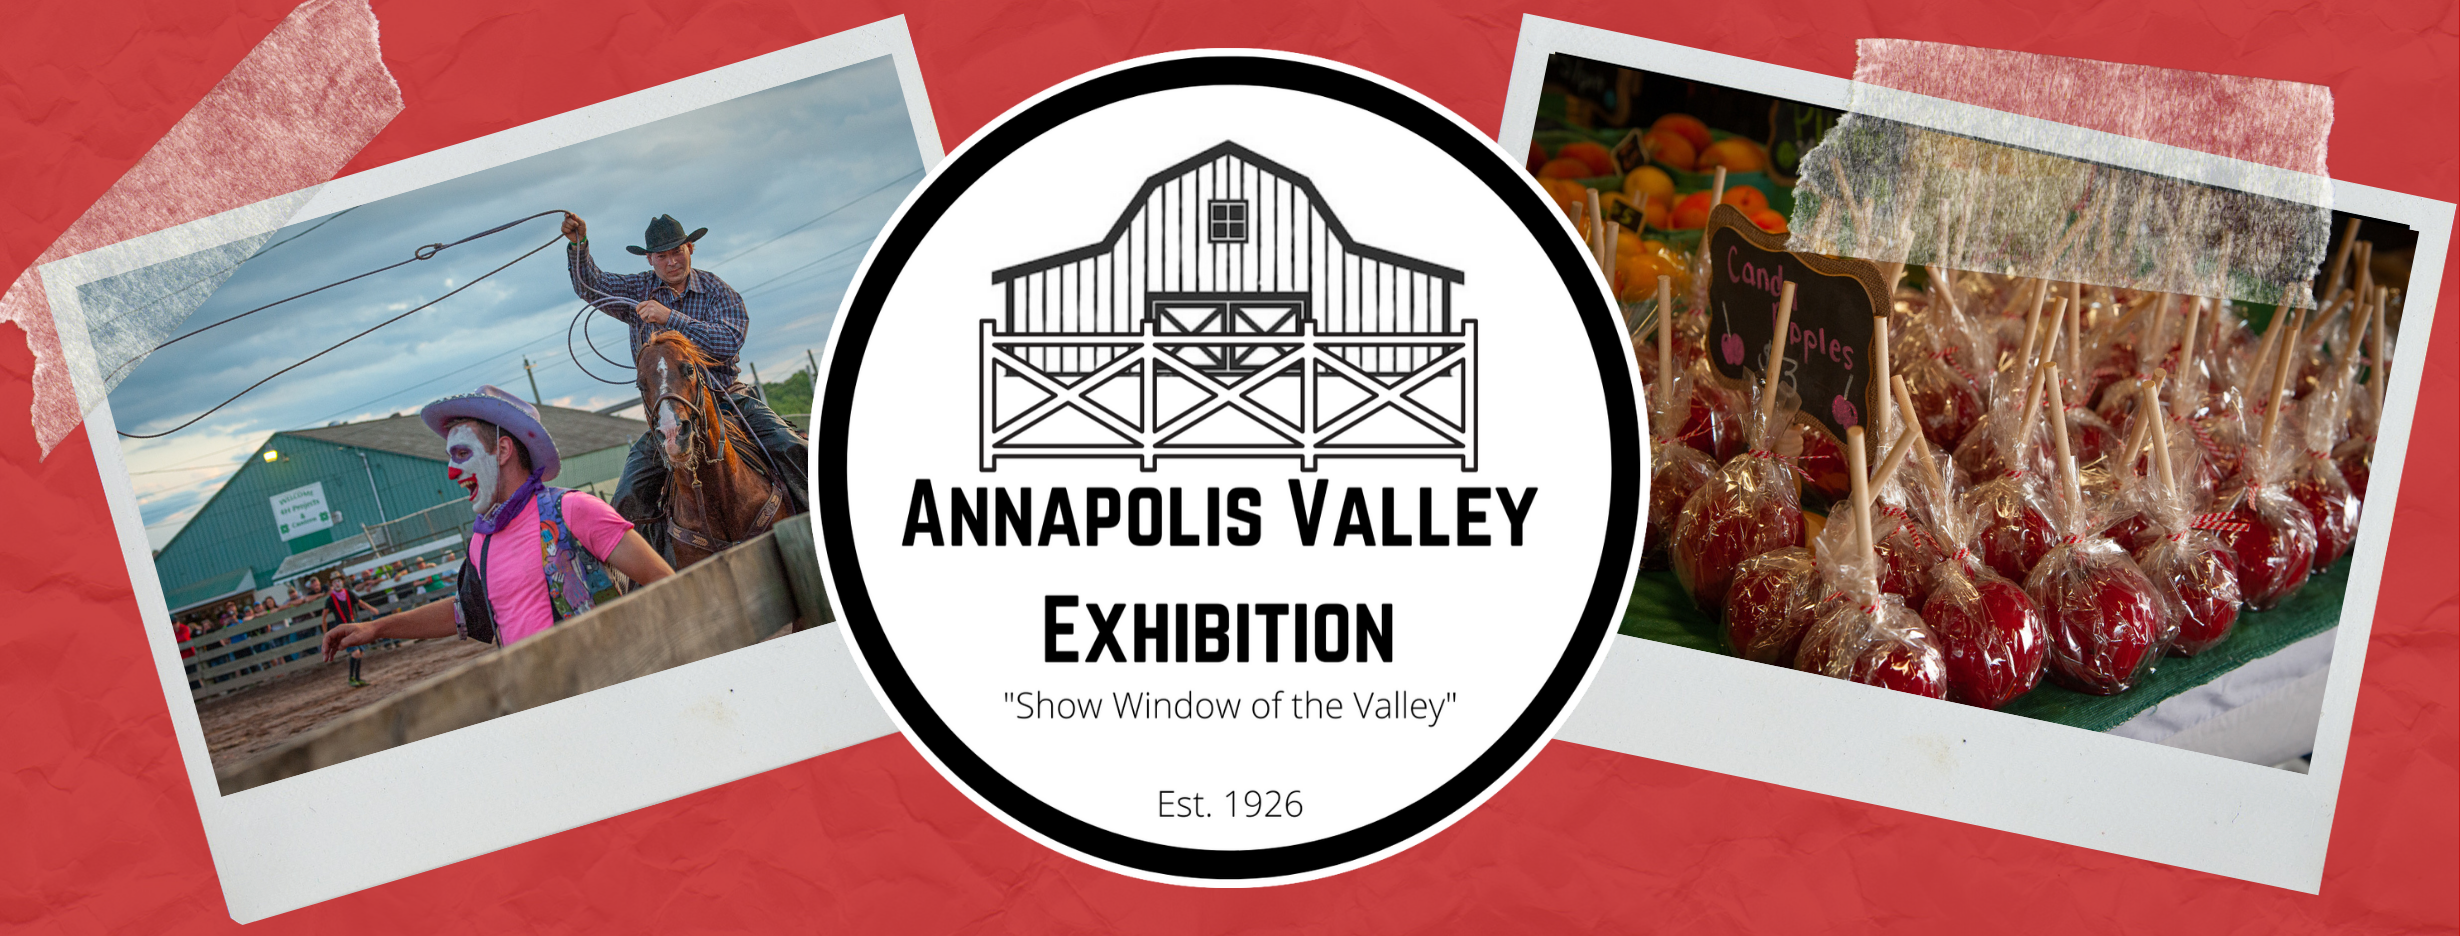 Annapolis Valley Exhibition